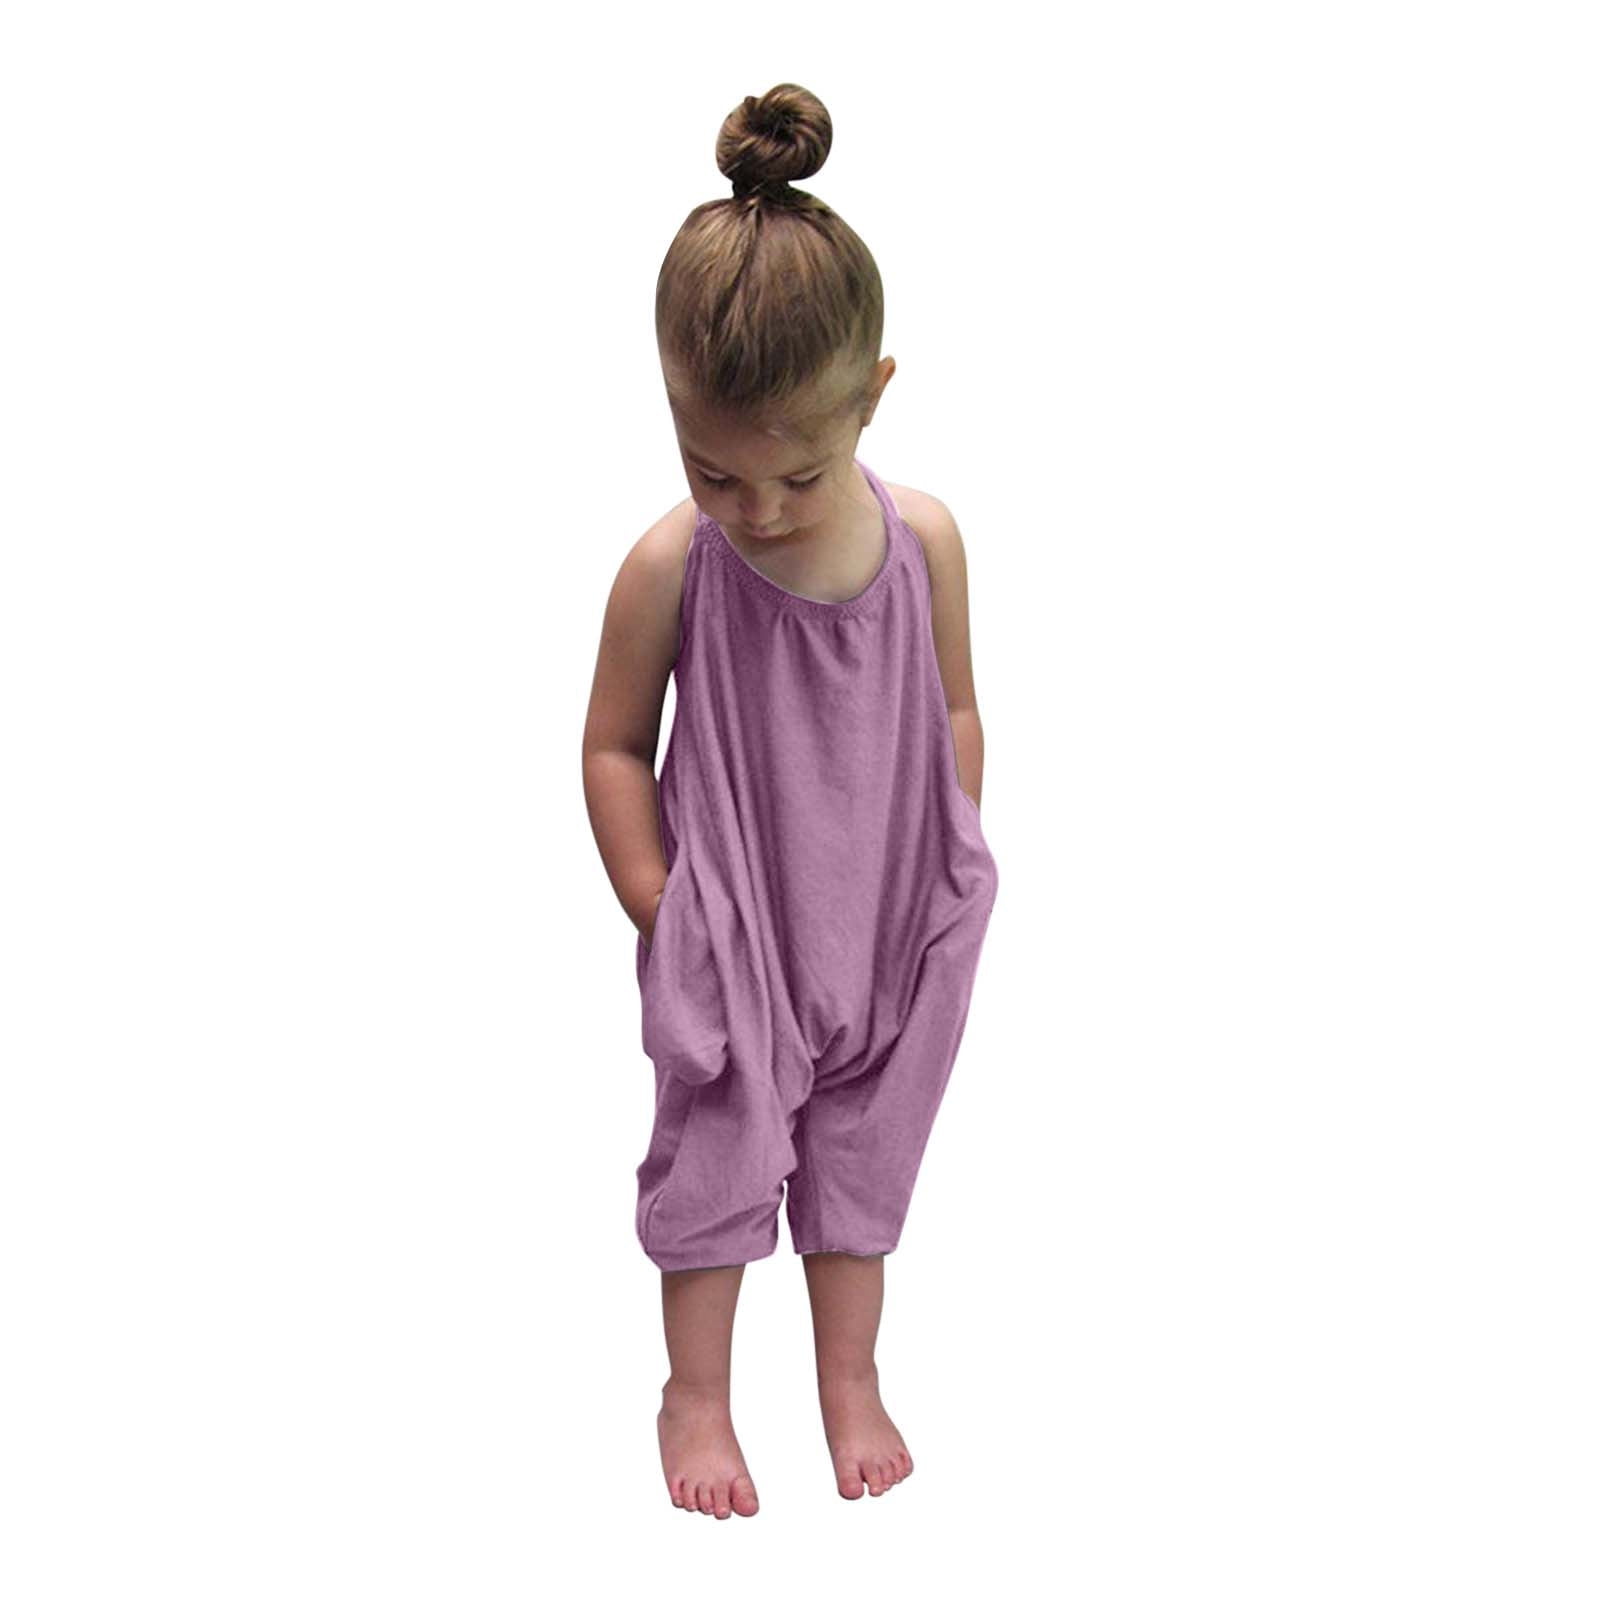 AherBiu Toddler Girls Clothes Baby Halter Bib Overalls Sleeveless ...